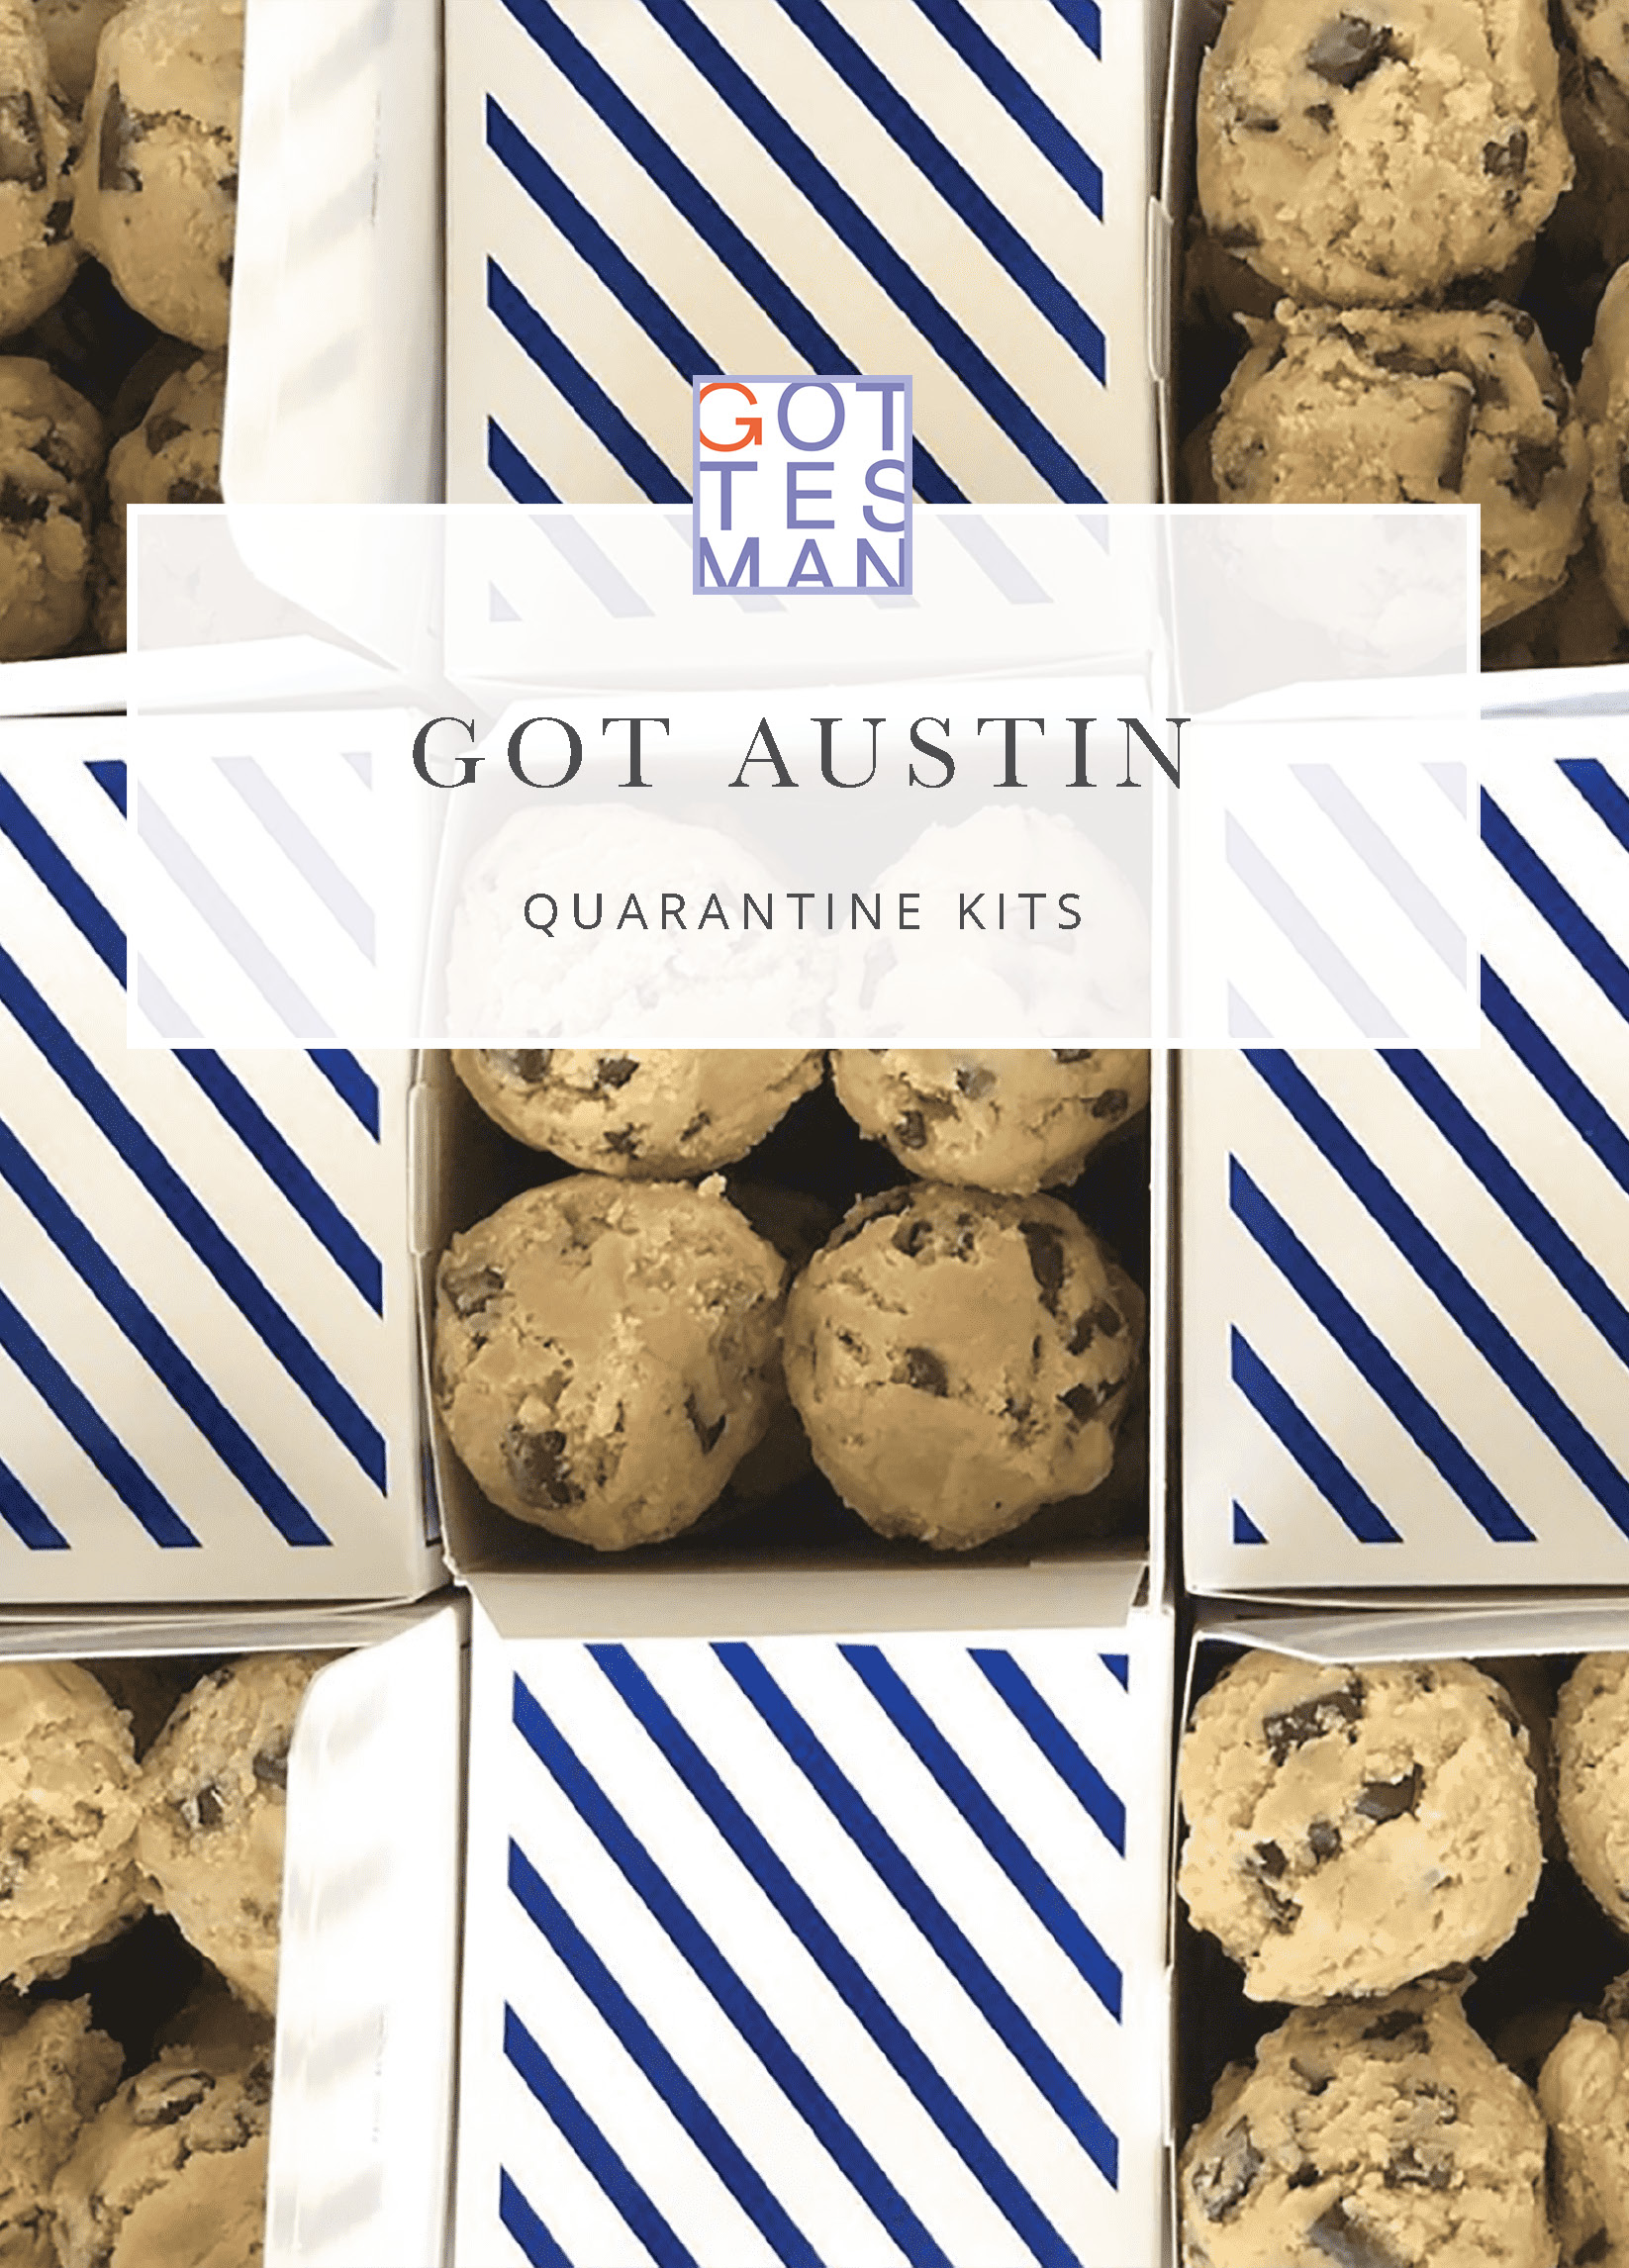 Cookie dough balls with text overlay, "Got Austin: Quarantine Kits"